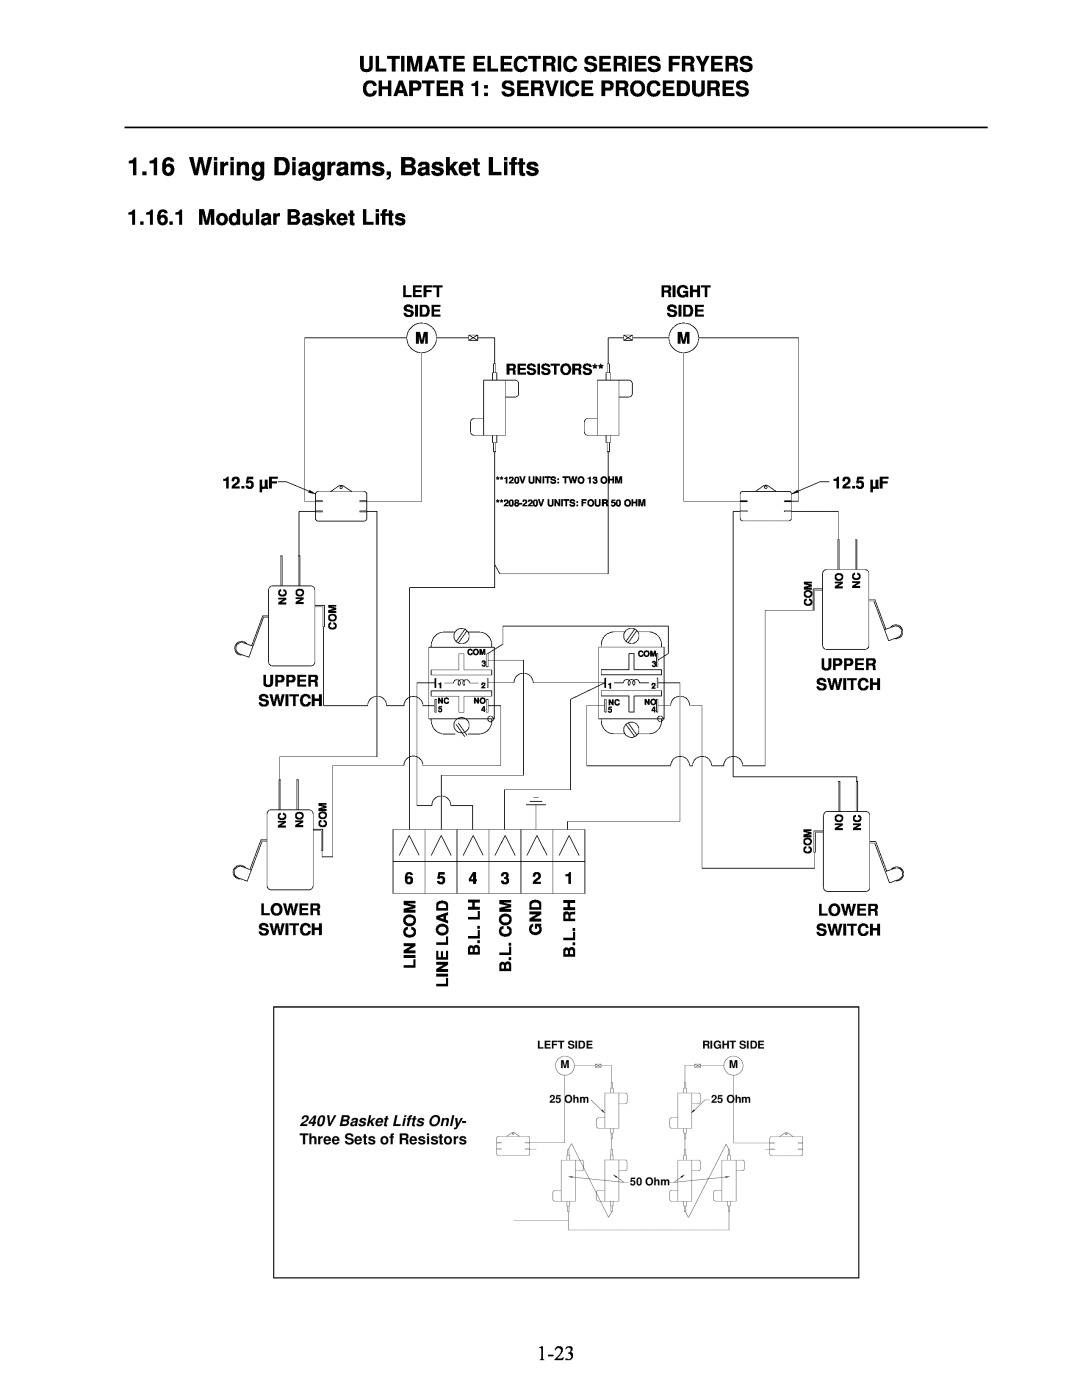 Frymaster Wiring Diagrams, Basket Lifts, Modular Basket Lifts, Ultimate Electric Series Fryers, Service Procedures 